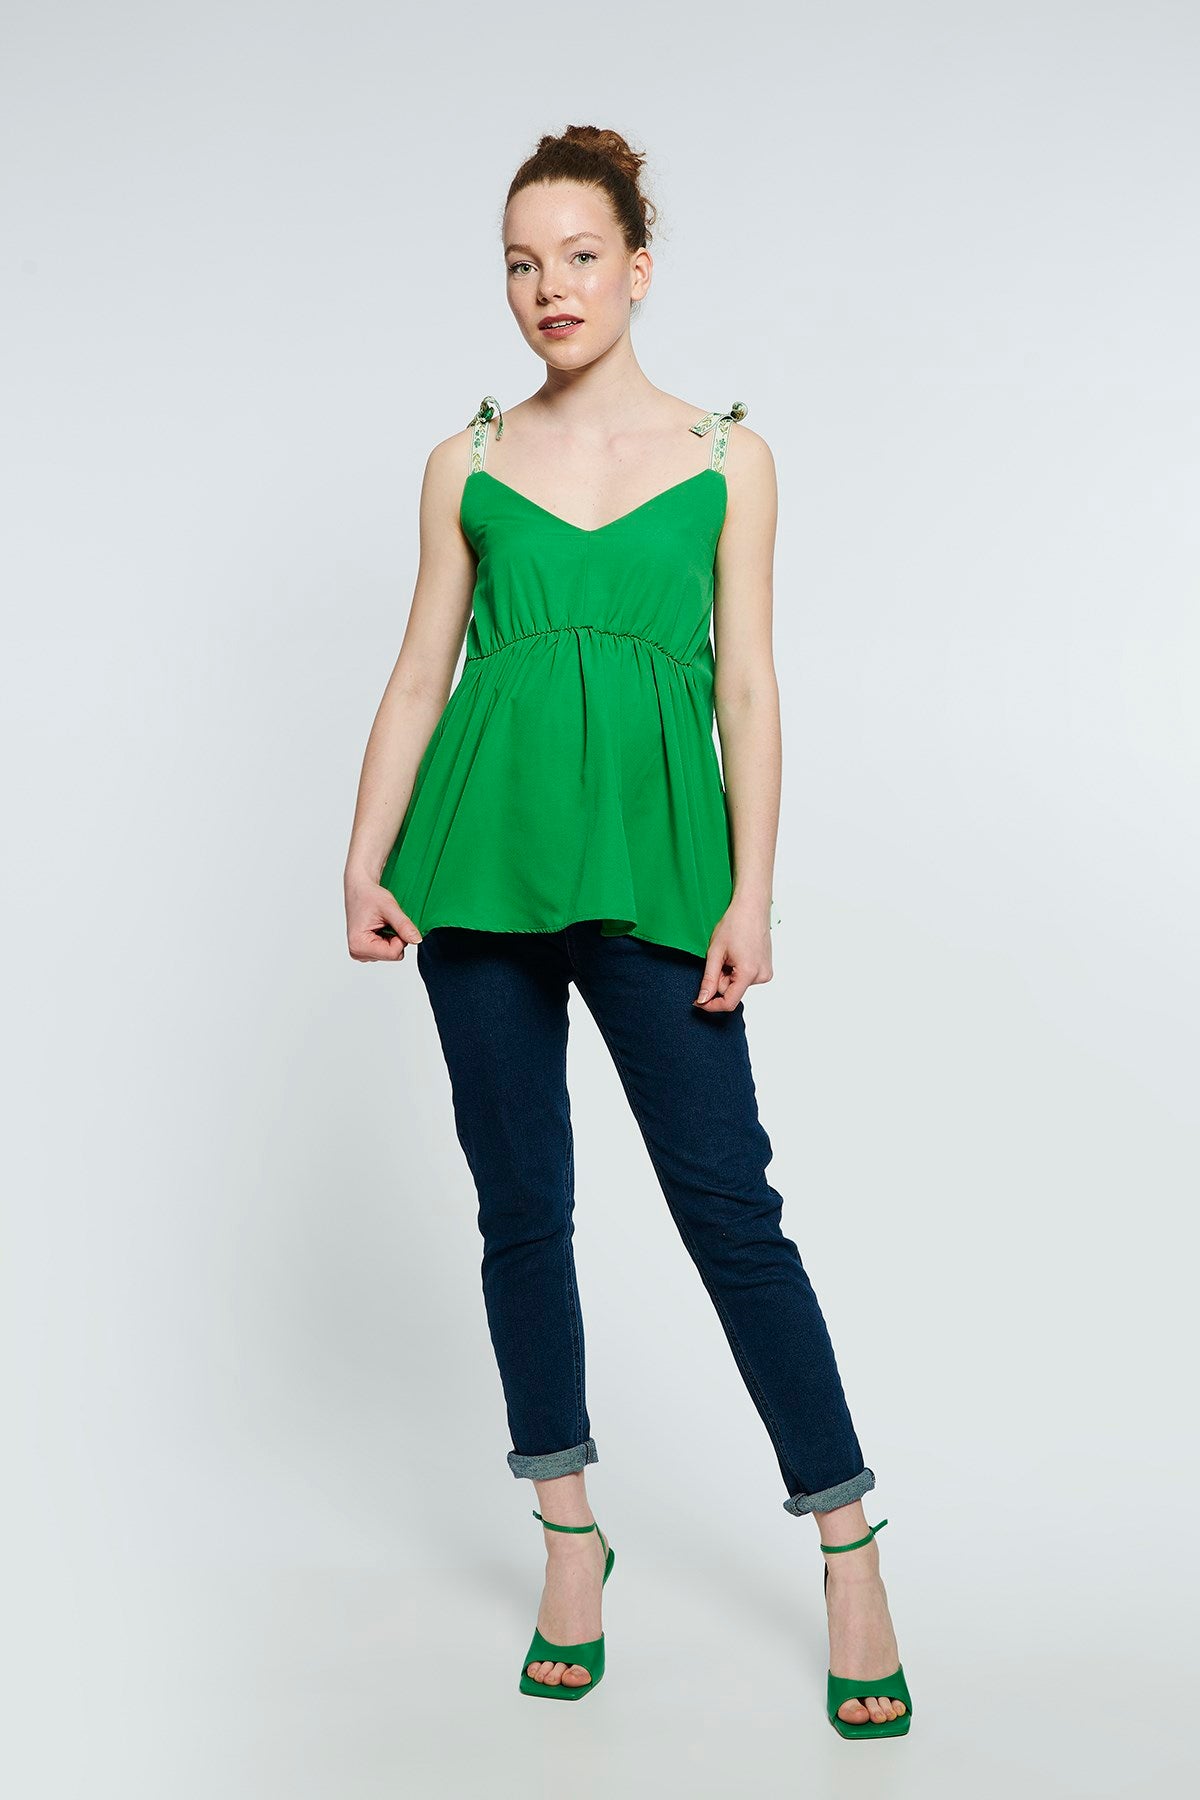 Hamile Effie Bluz - Yeşil M3187